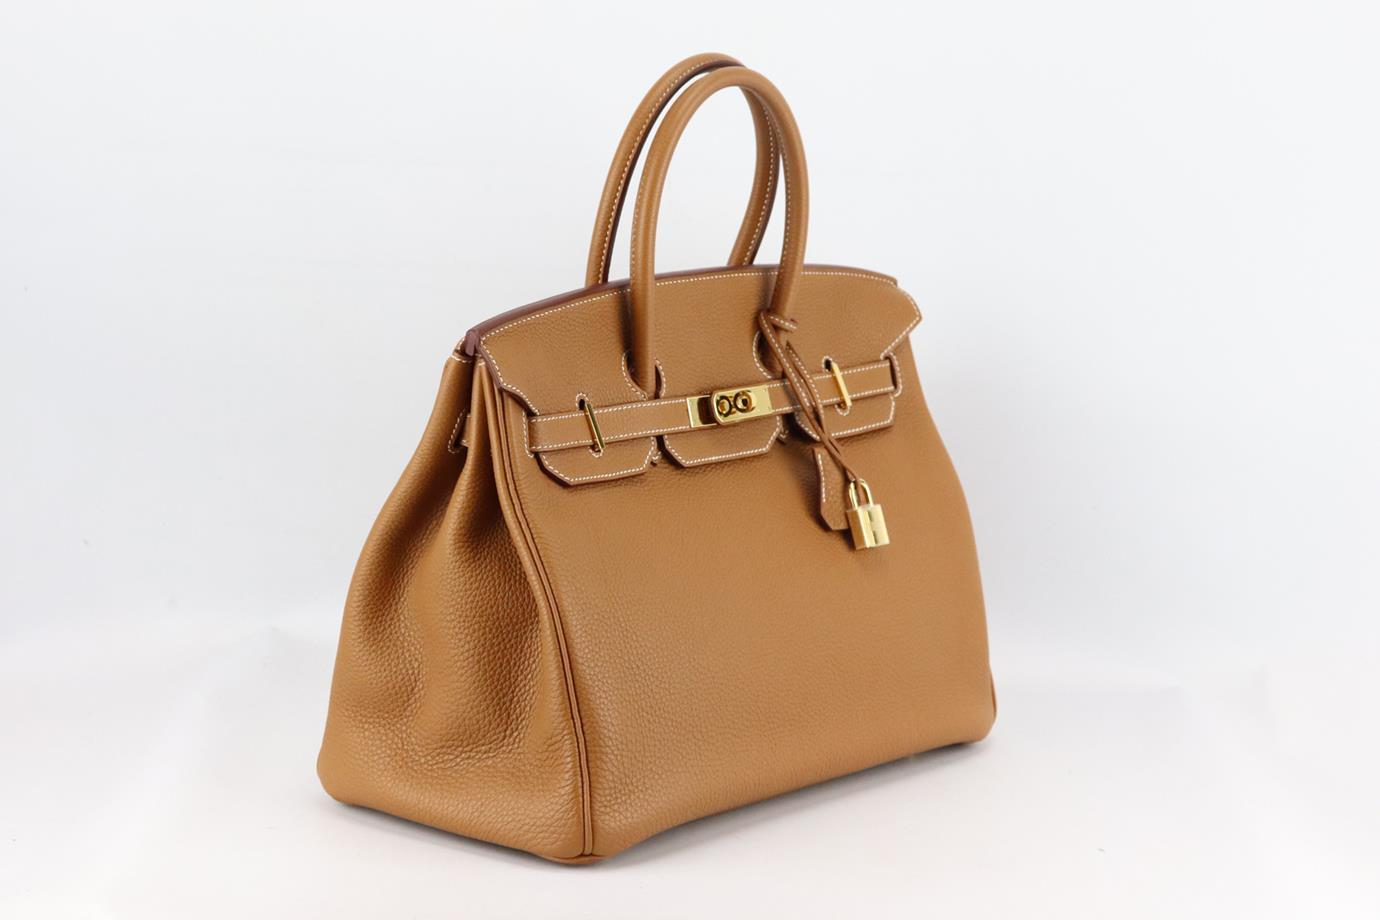 Hermès 2011 Birkin 35cm Togo Leather Bag 1